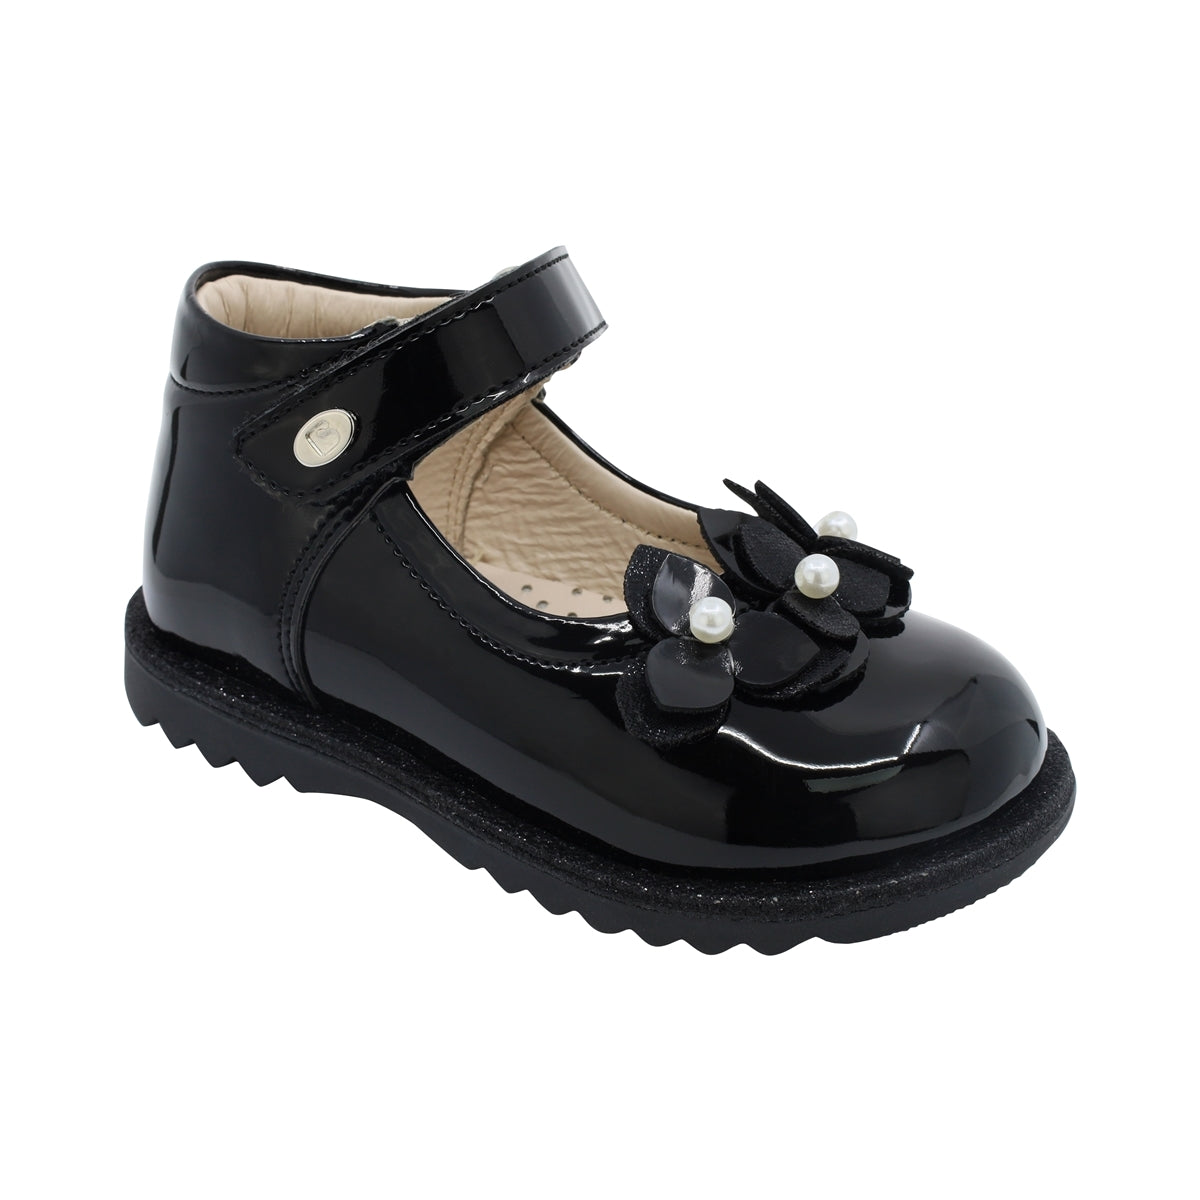 Pakar.com - Mayo: Regalos para mamá | Zapato para niña cod-118516